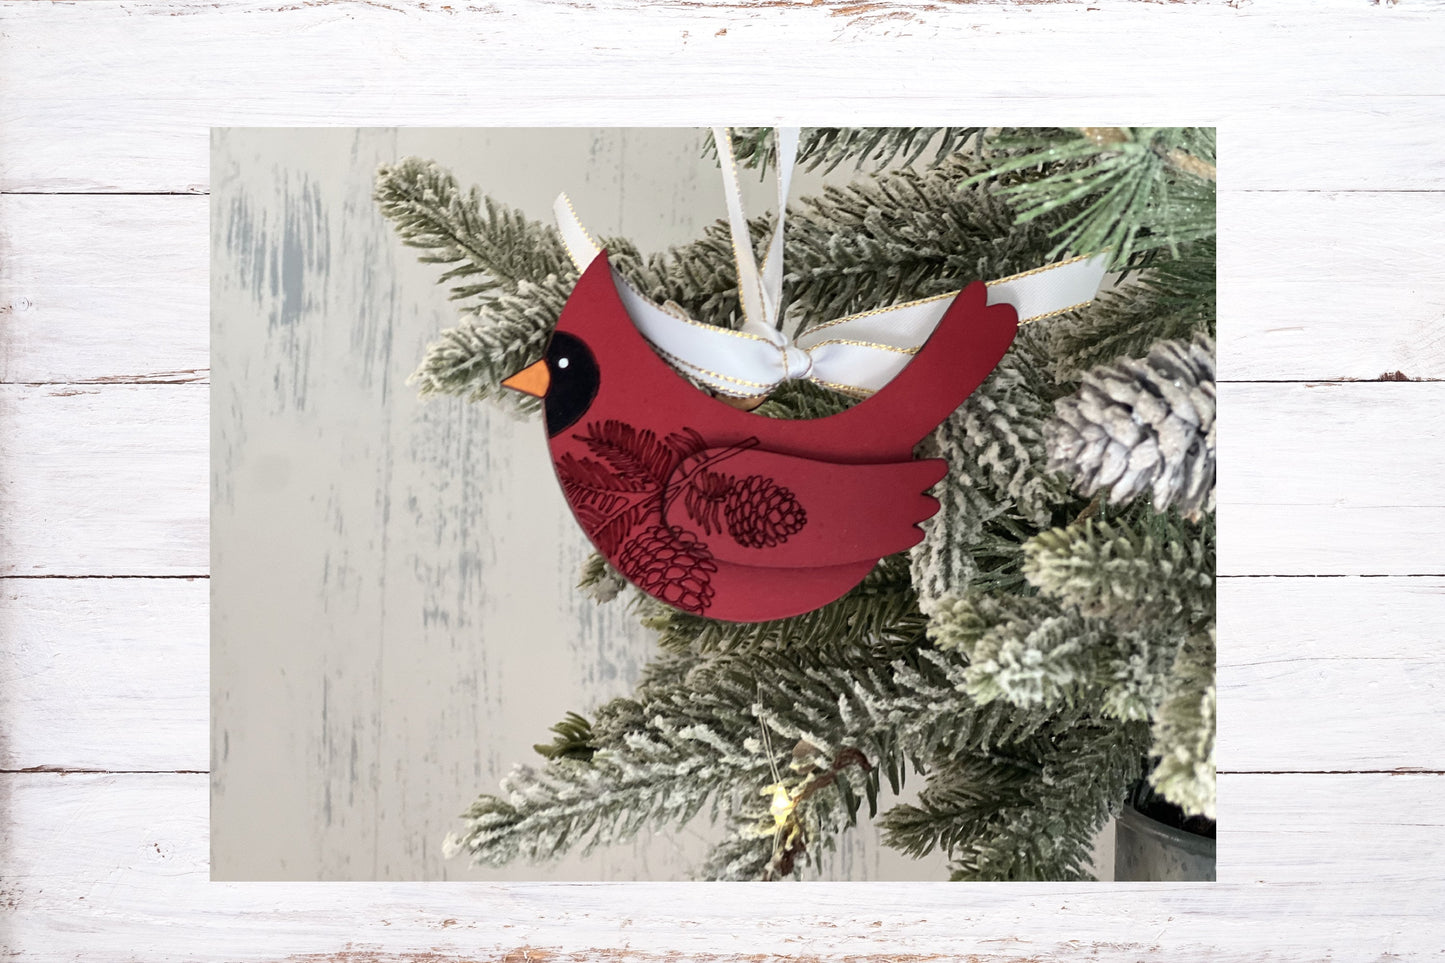 Digital Cut File - Laser Cut Ornament - Decorative Engraved Cardinal